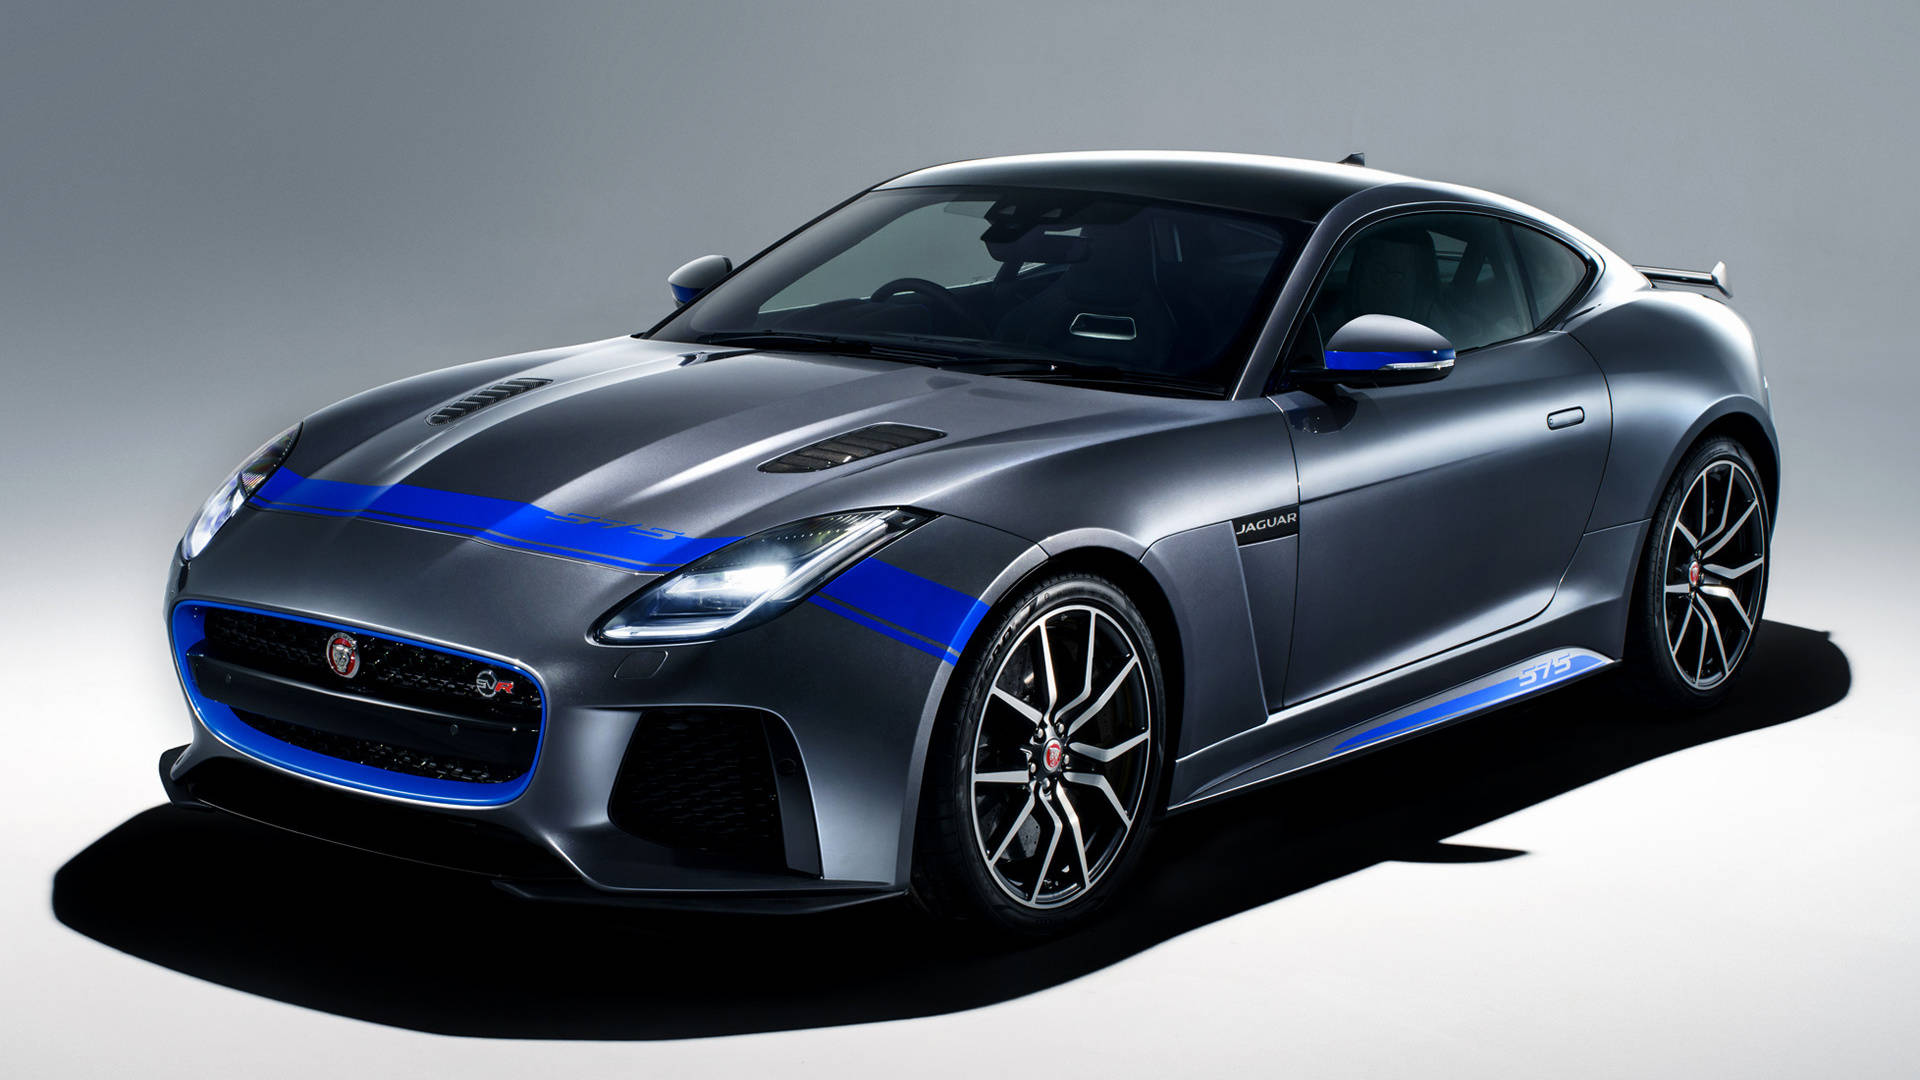 2018 Jaguar F-type Graphic Background